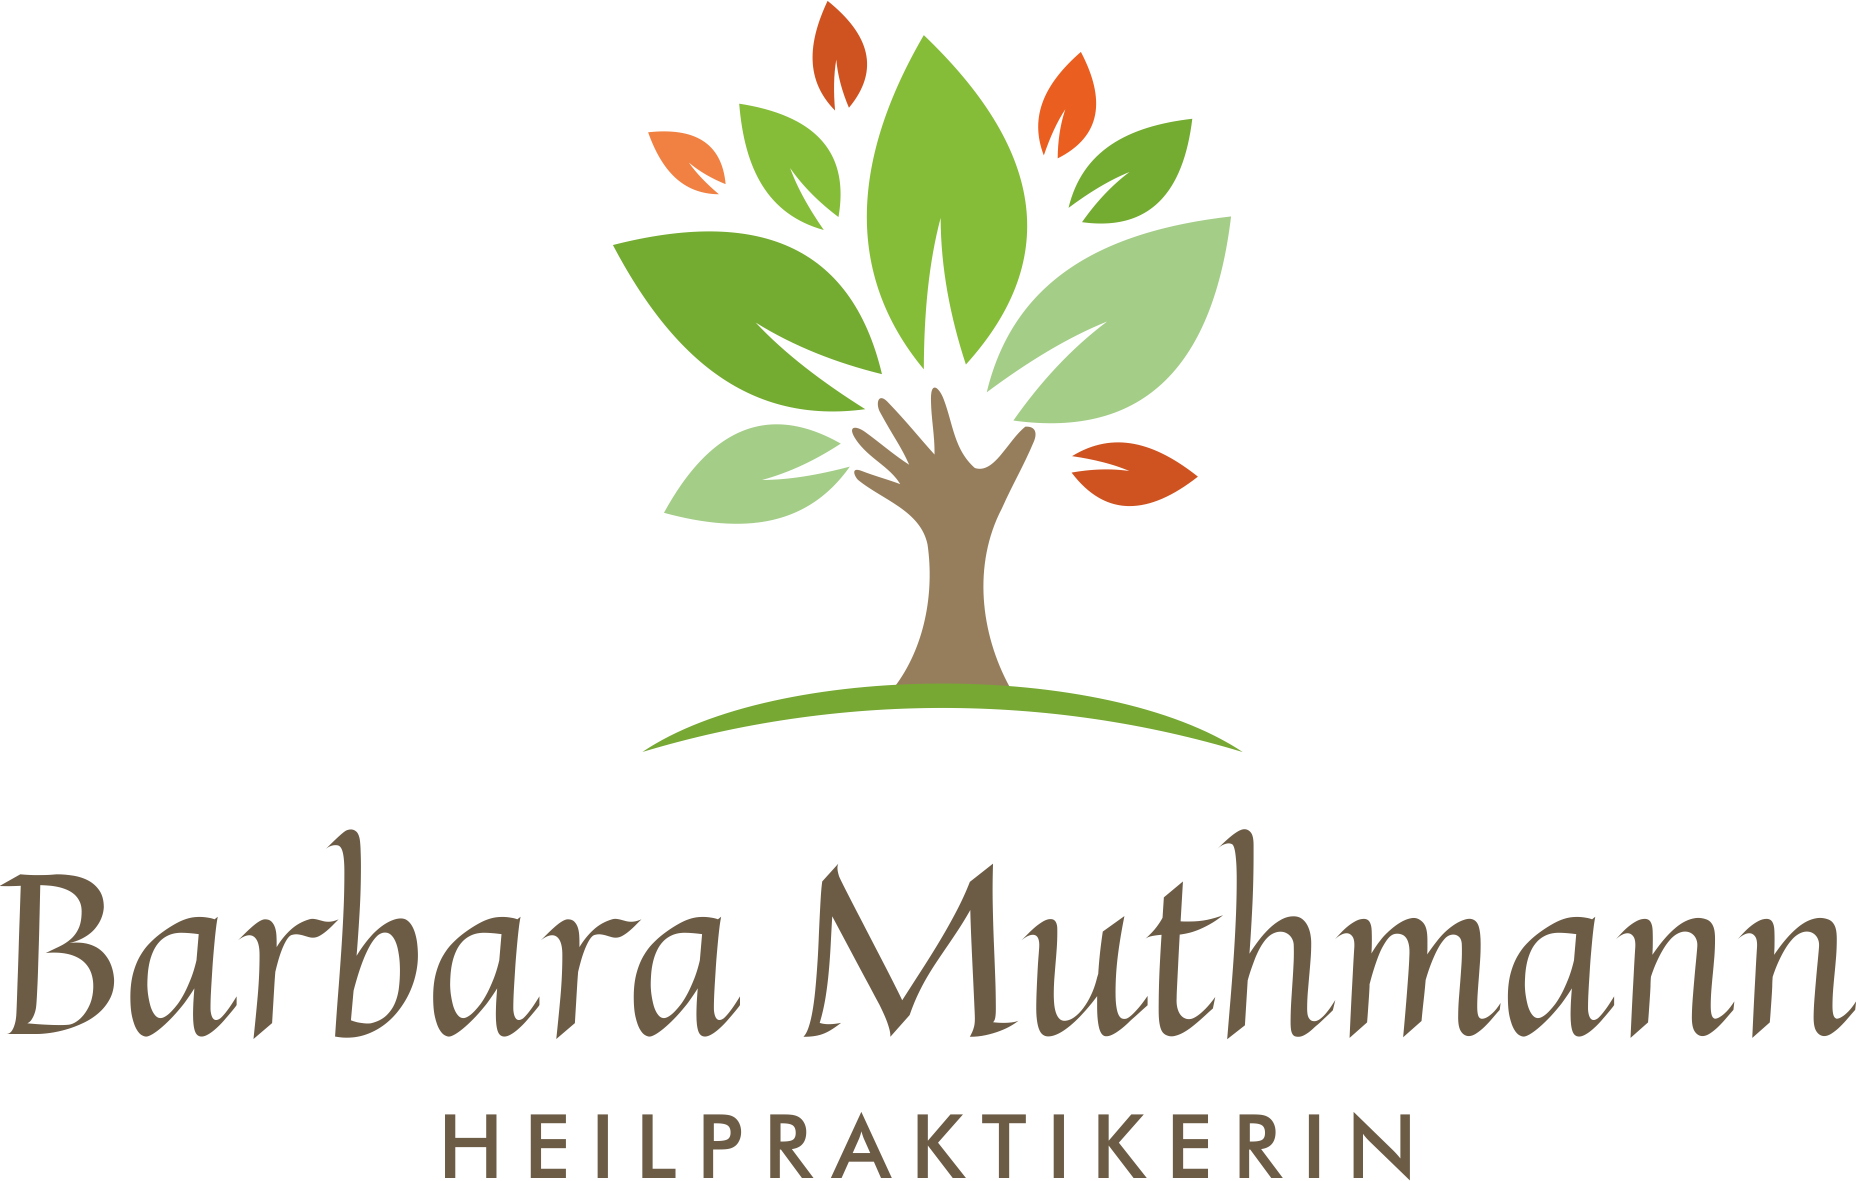 Barbara Muthmann